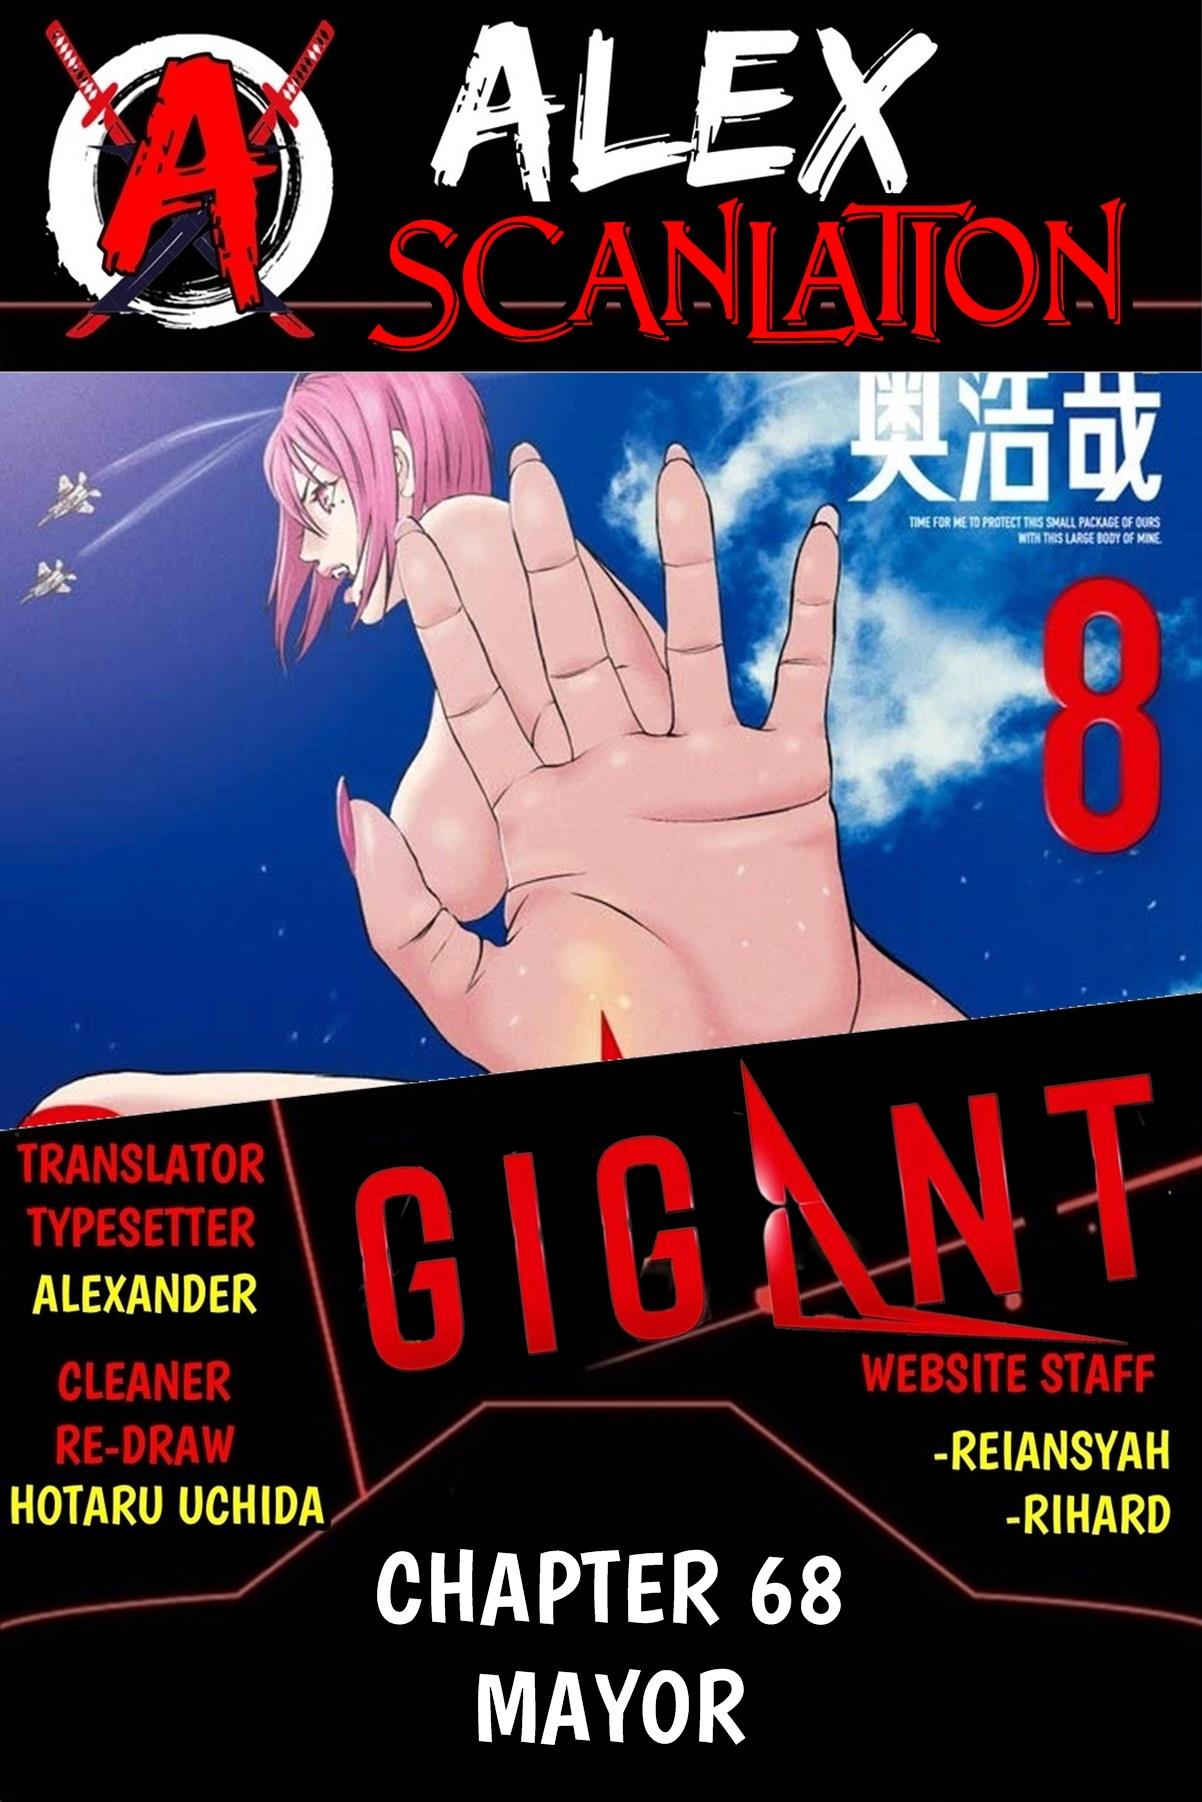 GIGANT Chapter 68